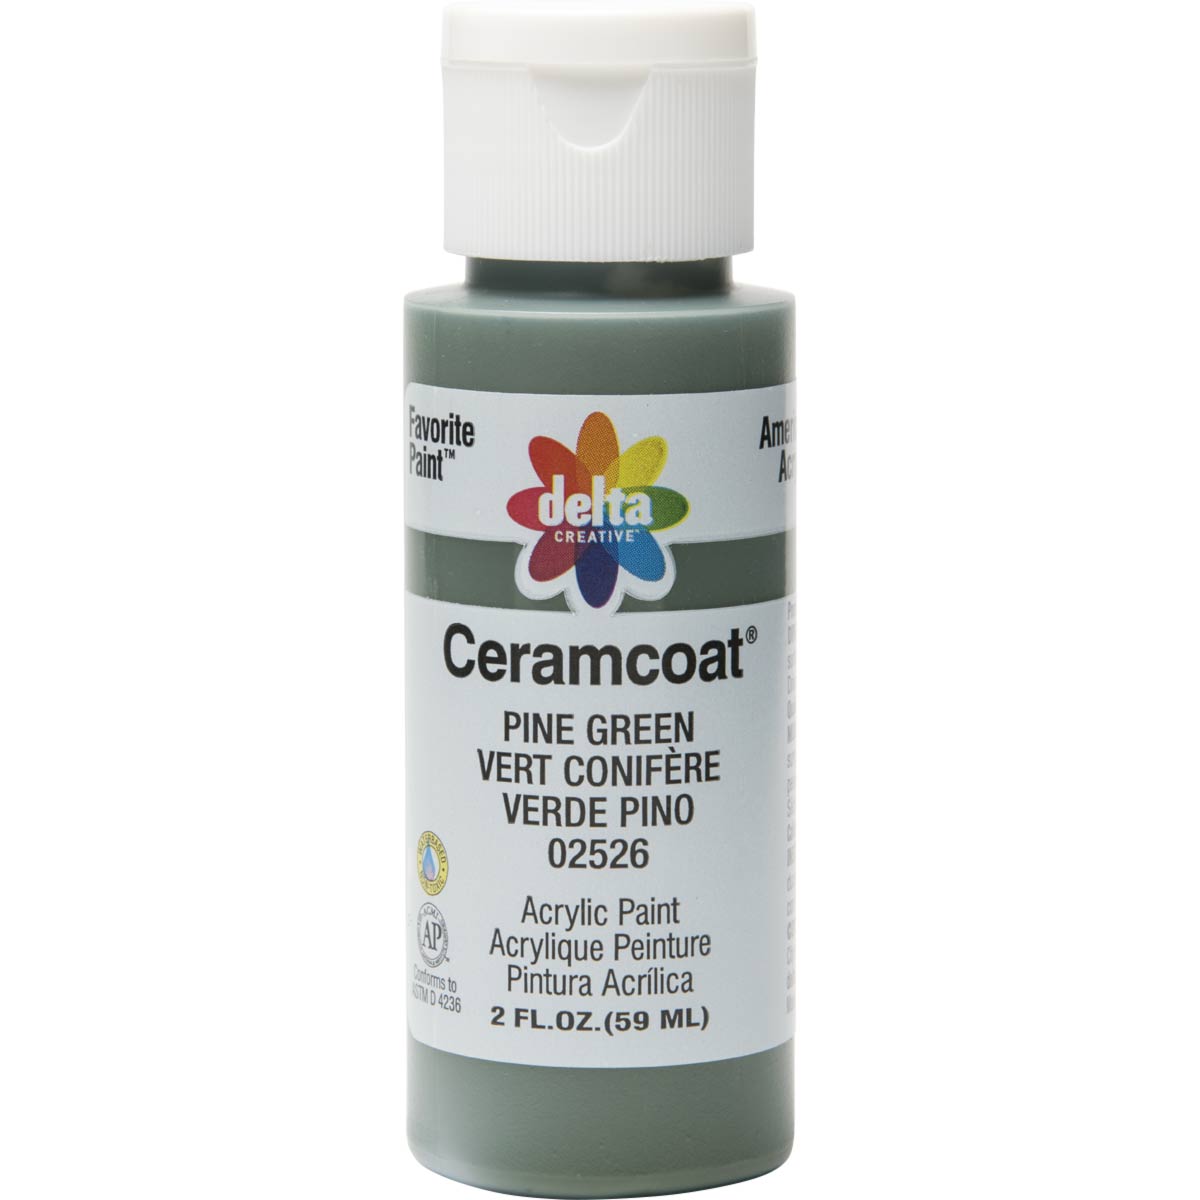 Delta Ceramcoat Acrylic Paint - Pine Green, 2 oz. - 025260202W